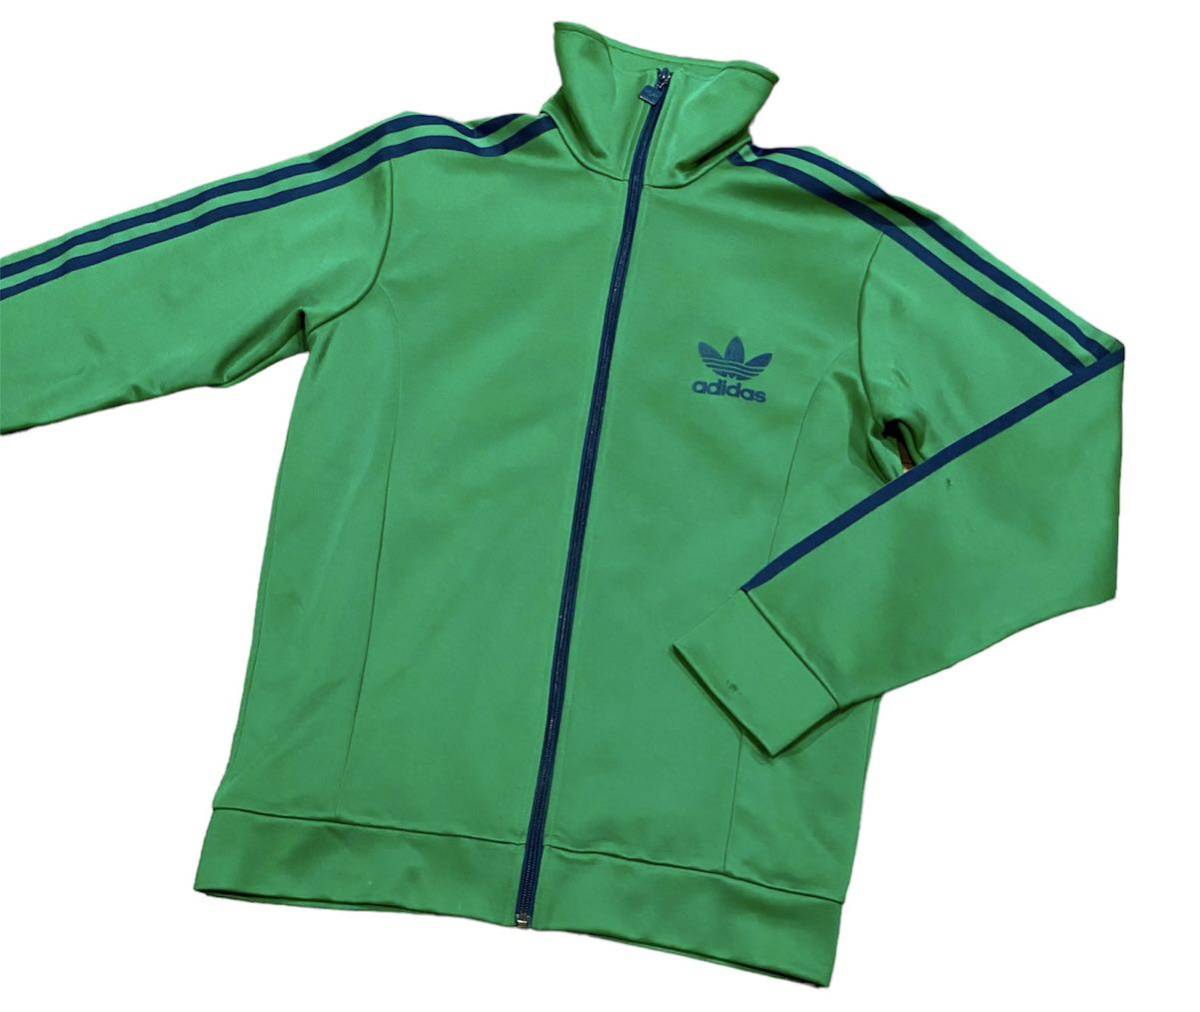 [ трудно найти ]ADIDAS спортивная куртка L зеленый цвет VINTAGE джерси Adidas джерси Vintage Vintage зеленый зеленый высшее редкий товар 